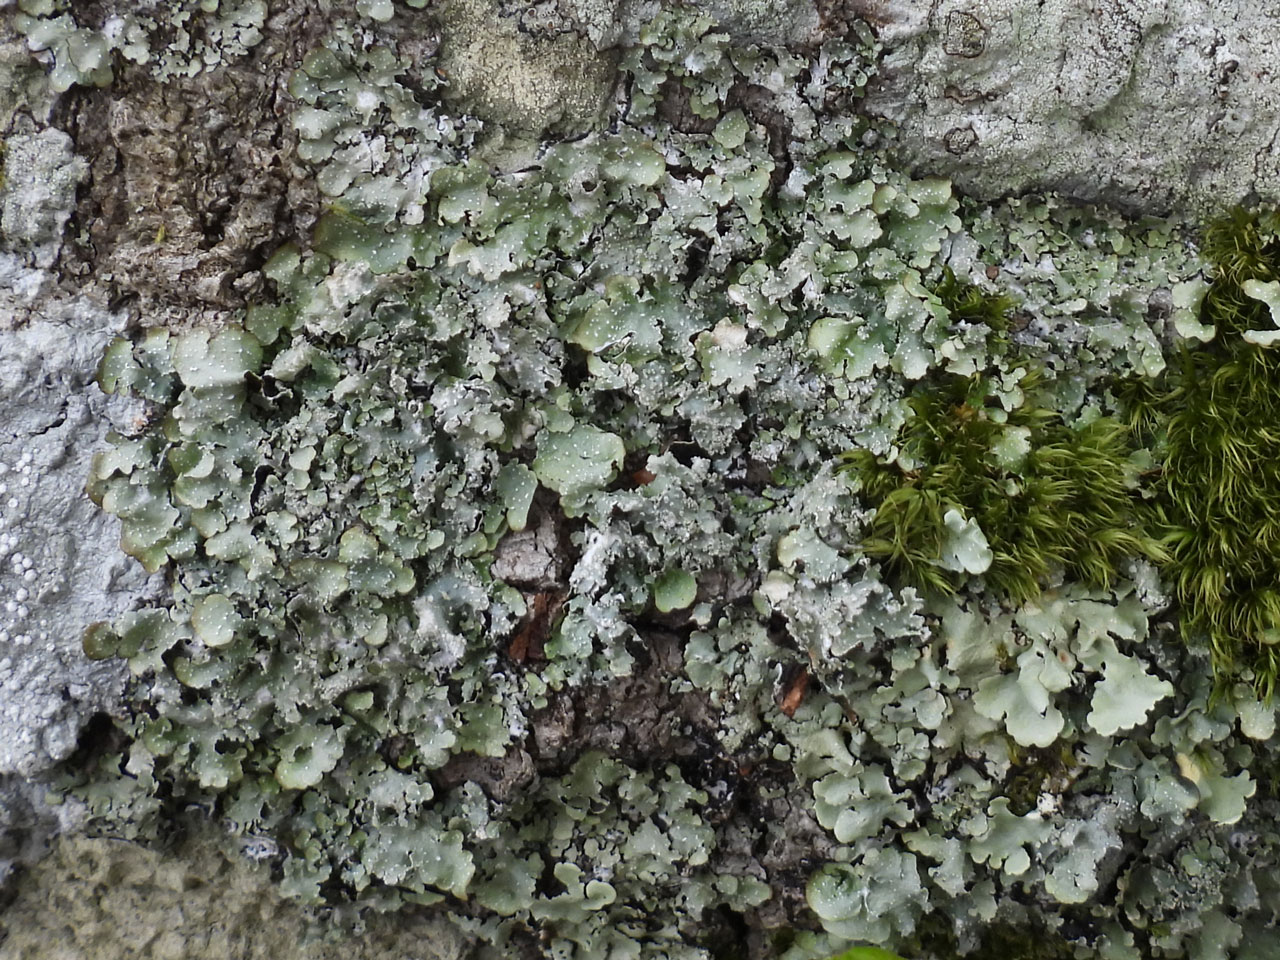 Punctelia reddenda, Beech, Rushpole Wood, New Forest